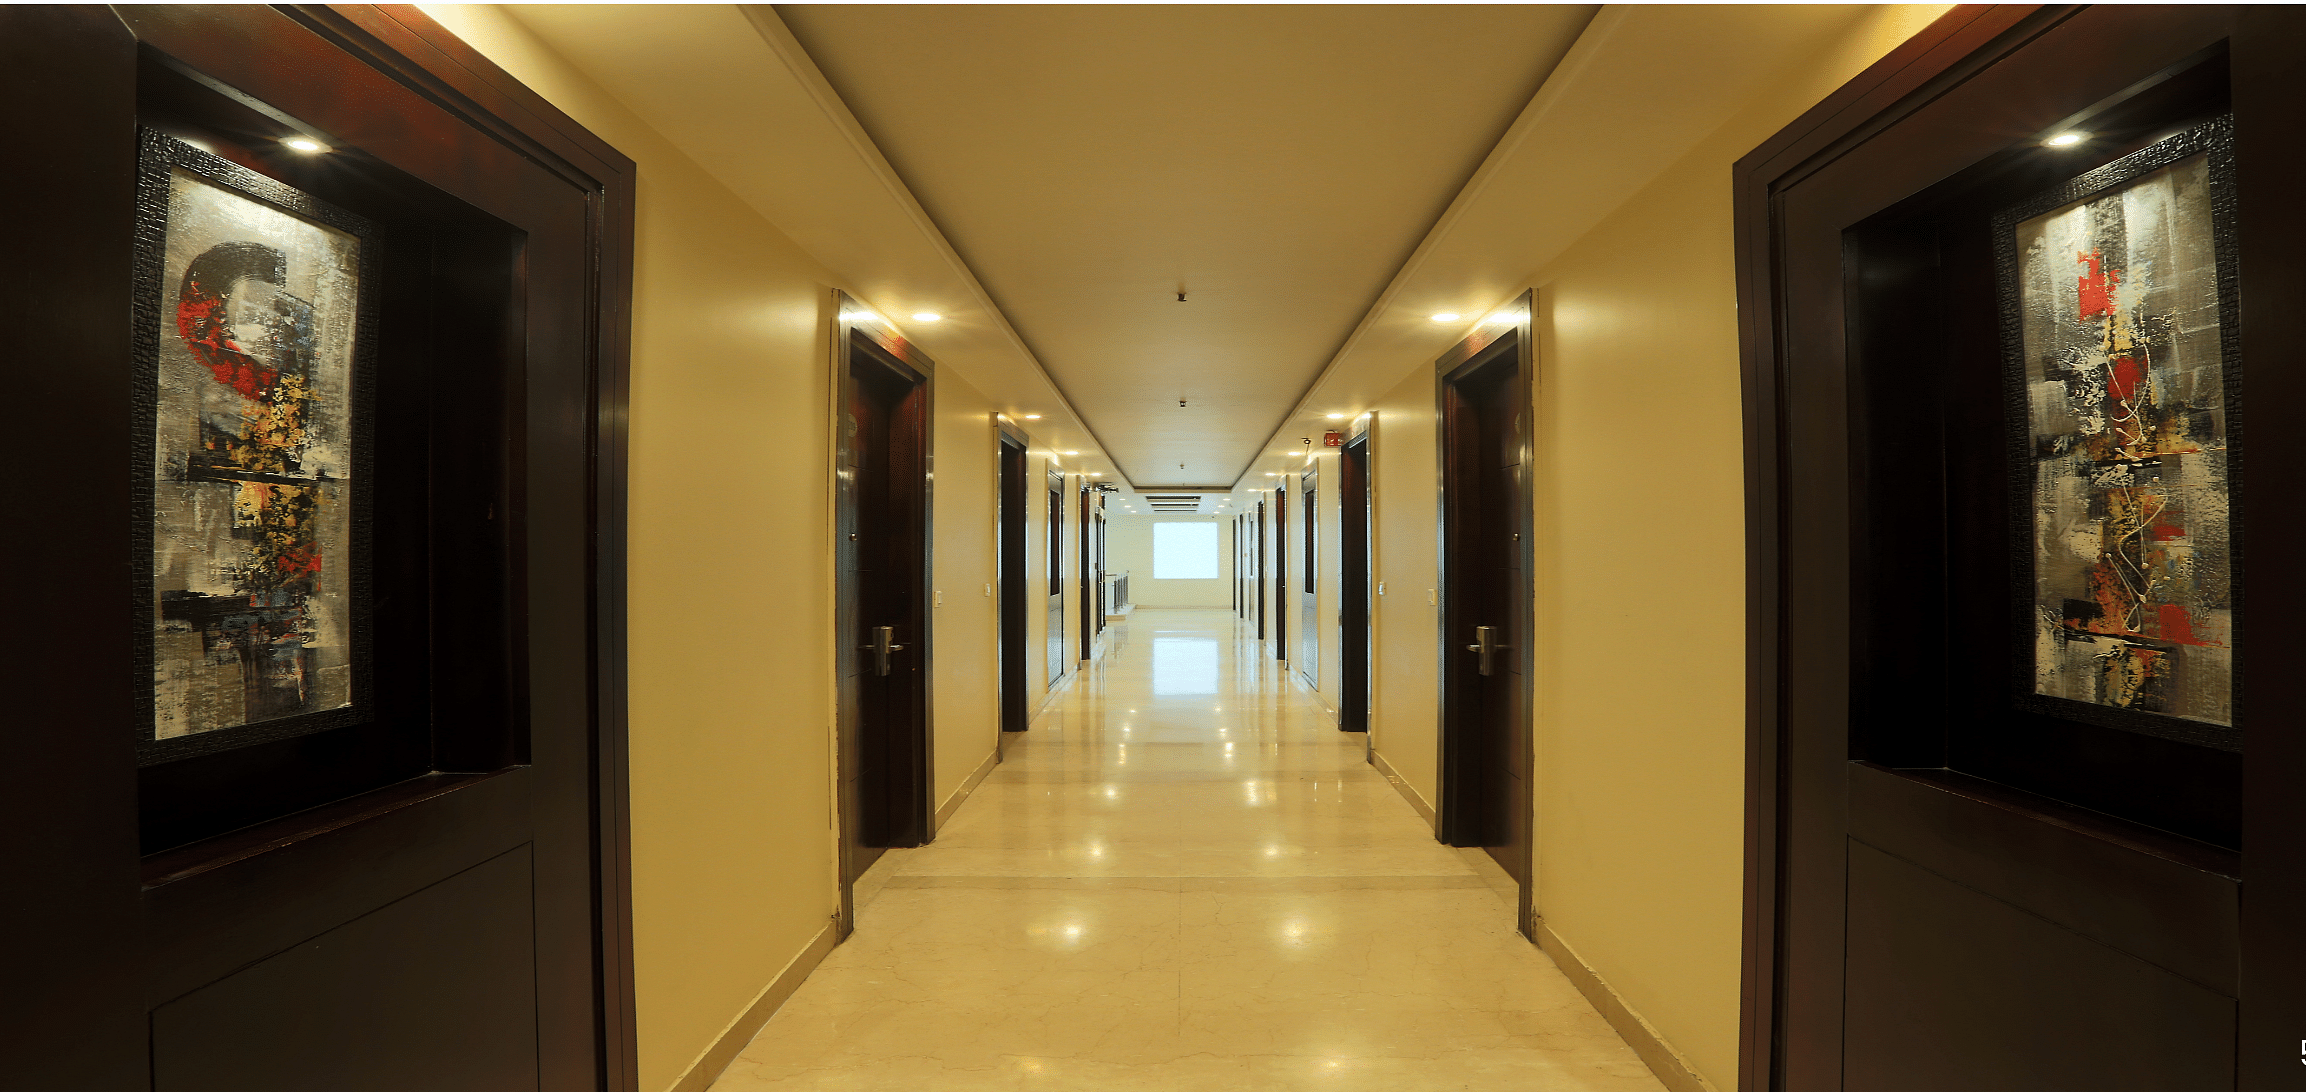 Hotel Mizu in Sector 15, Gurgaon